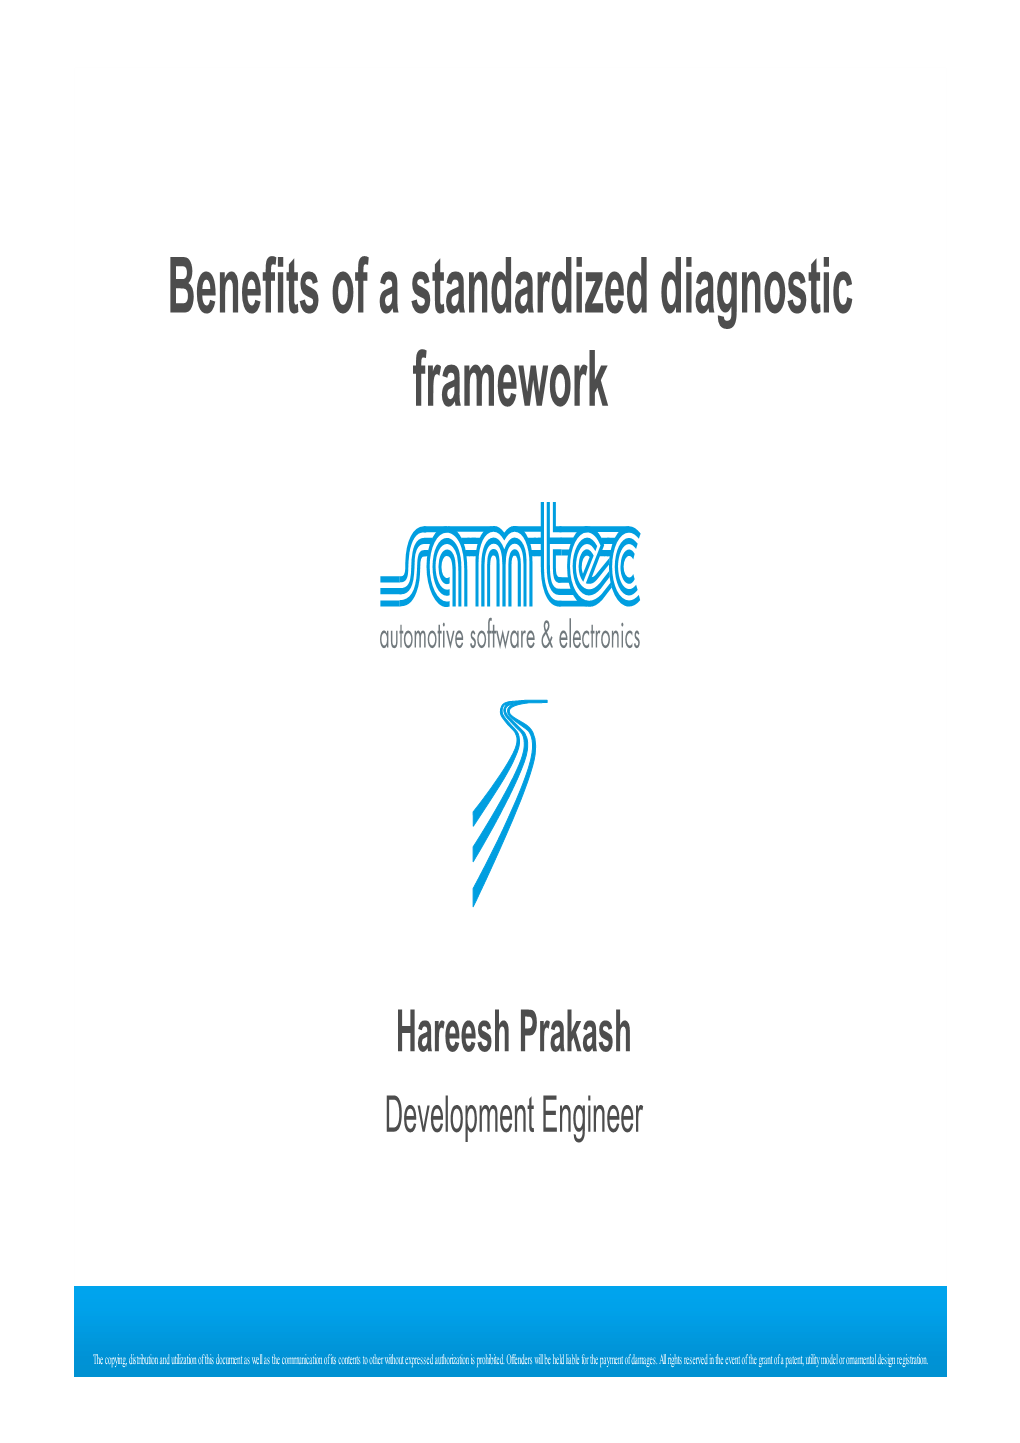 Benefits of a Standardized Diagnostic Framework